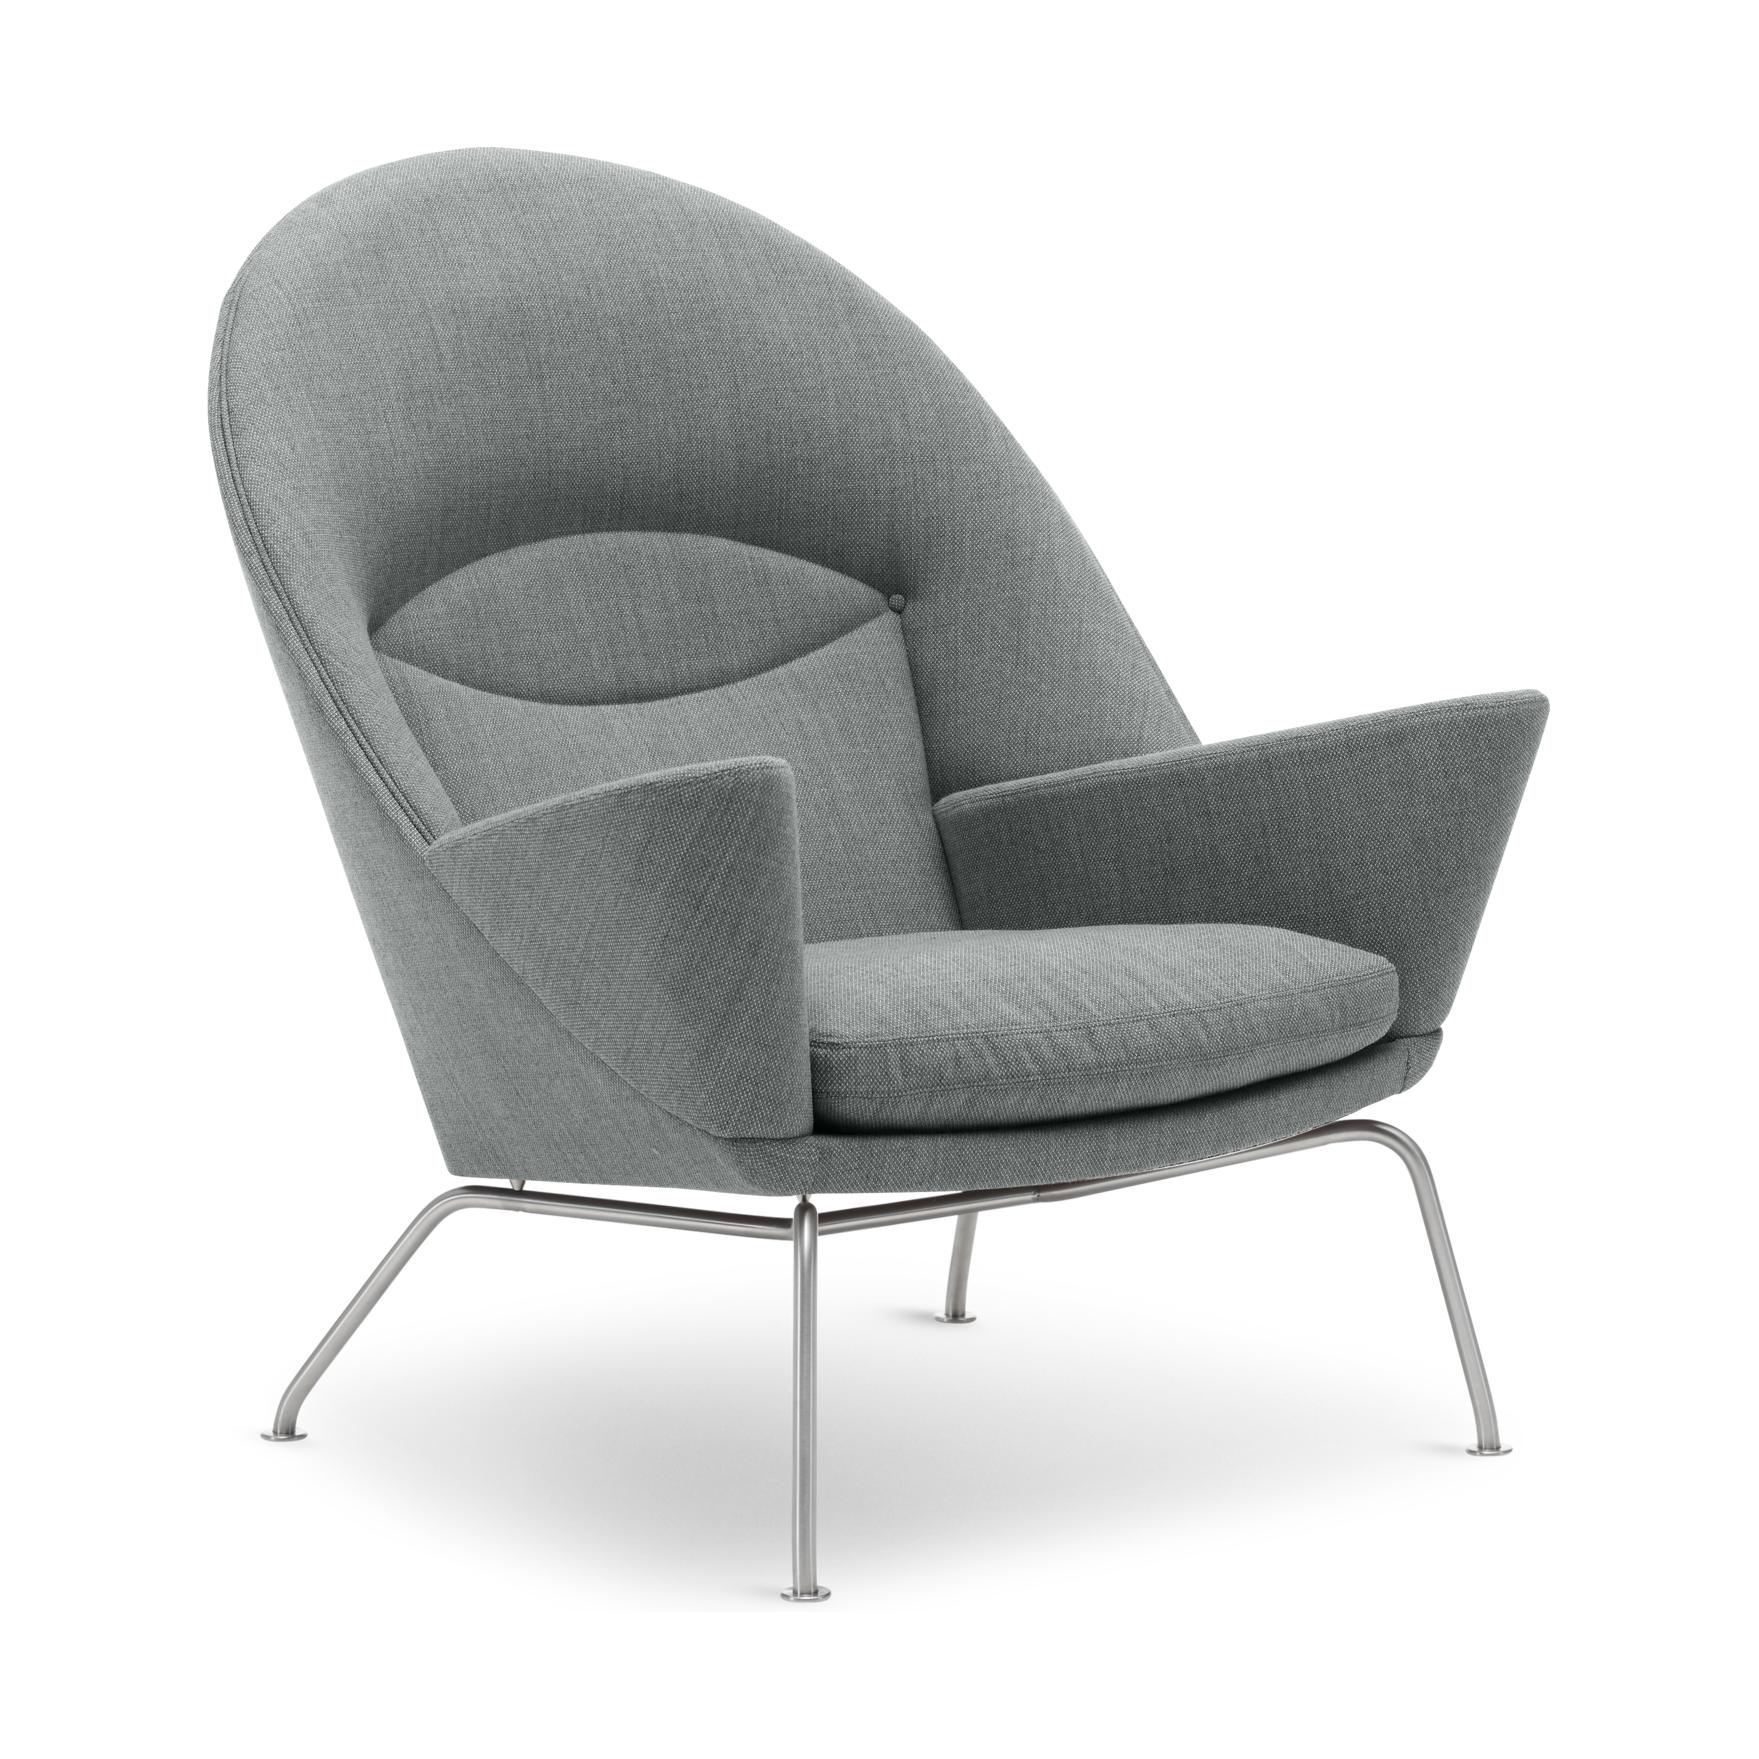 Carl Hansen CH468 Oculus stol, stål/lysegrå stof